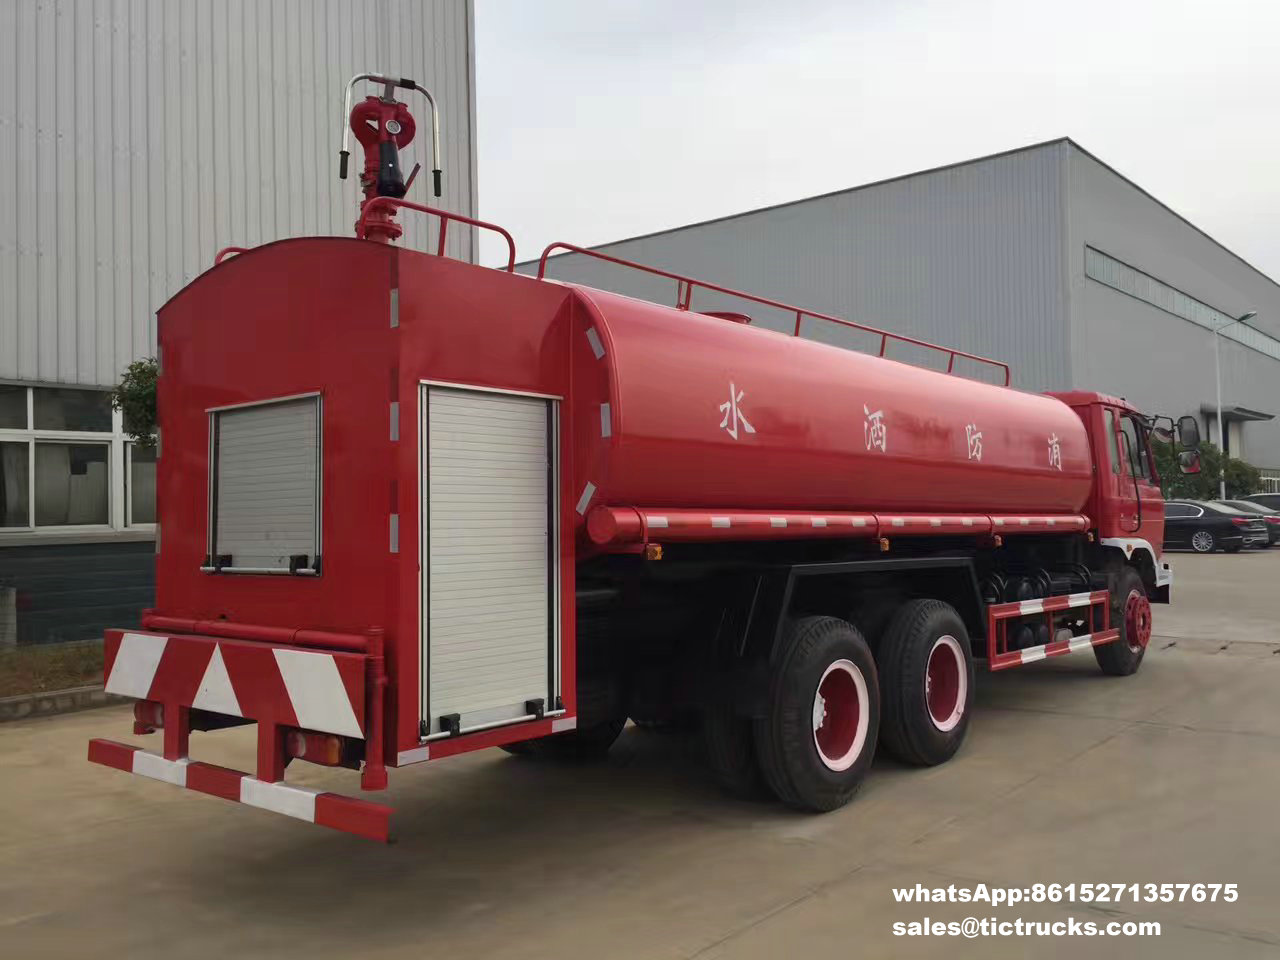 3200 gallons water tanker fire truck LHD,RHD